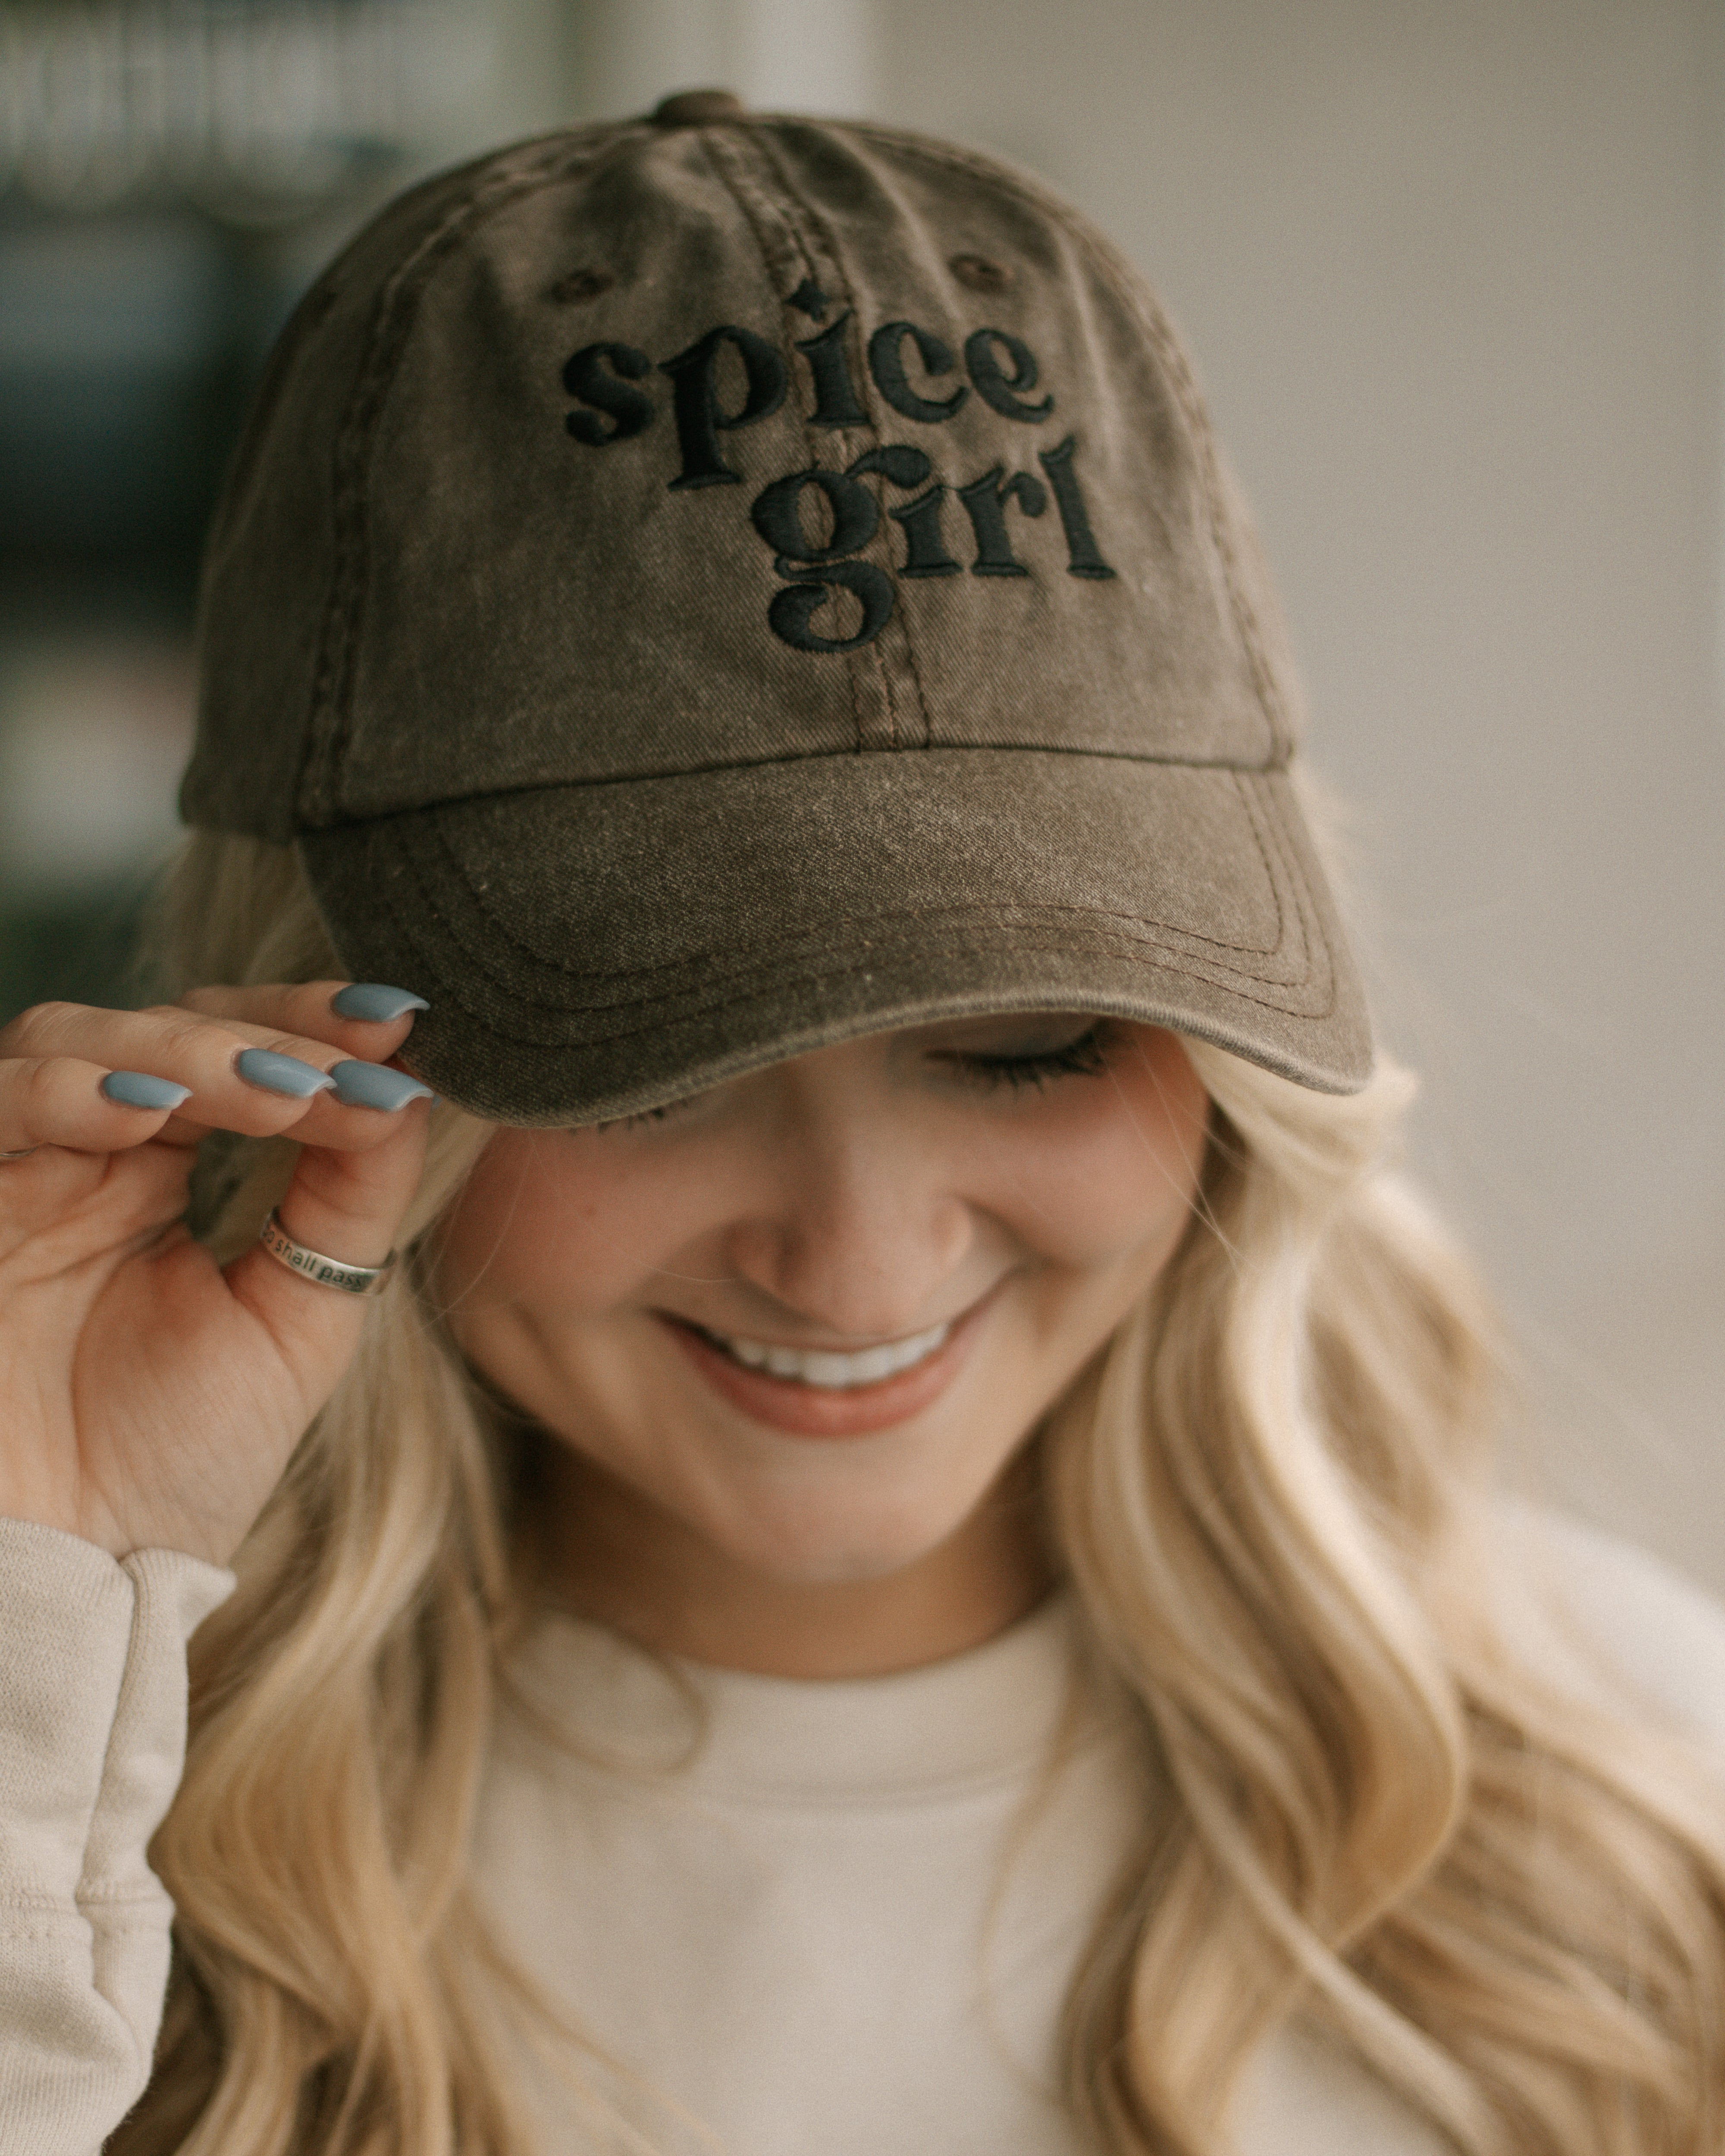 Spice Girl Baseball Cap